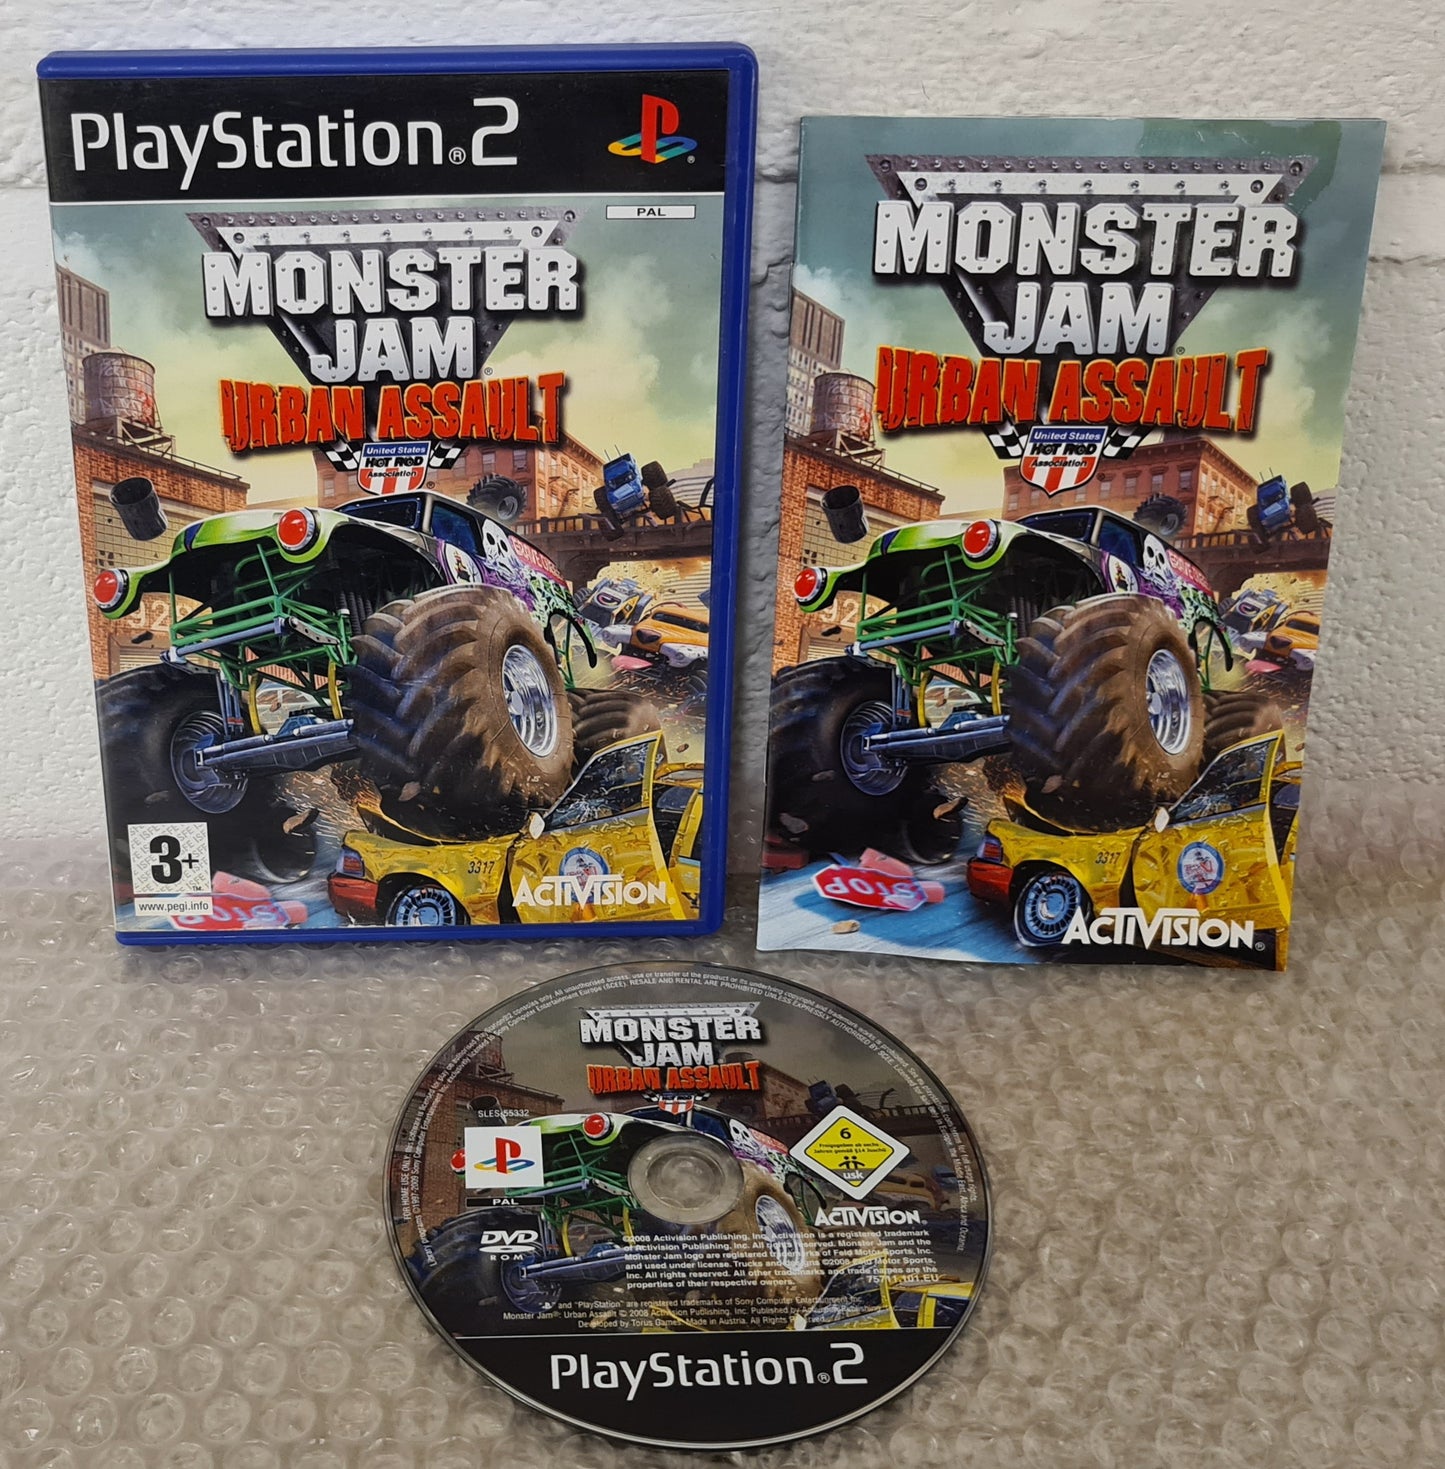 Monster Jam Urban Assault Sony Playstation 2 (PS2) Game